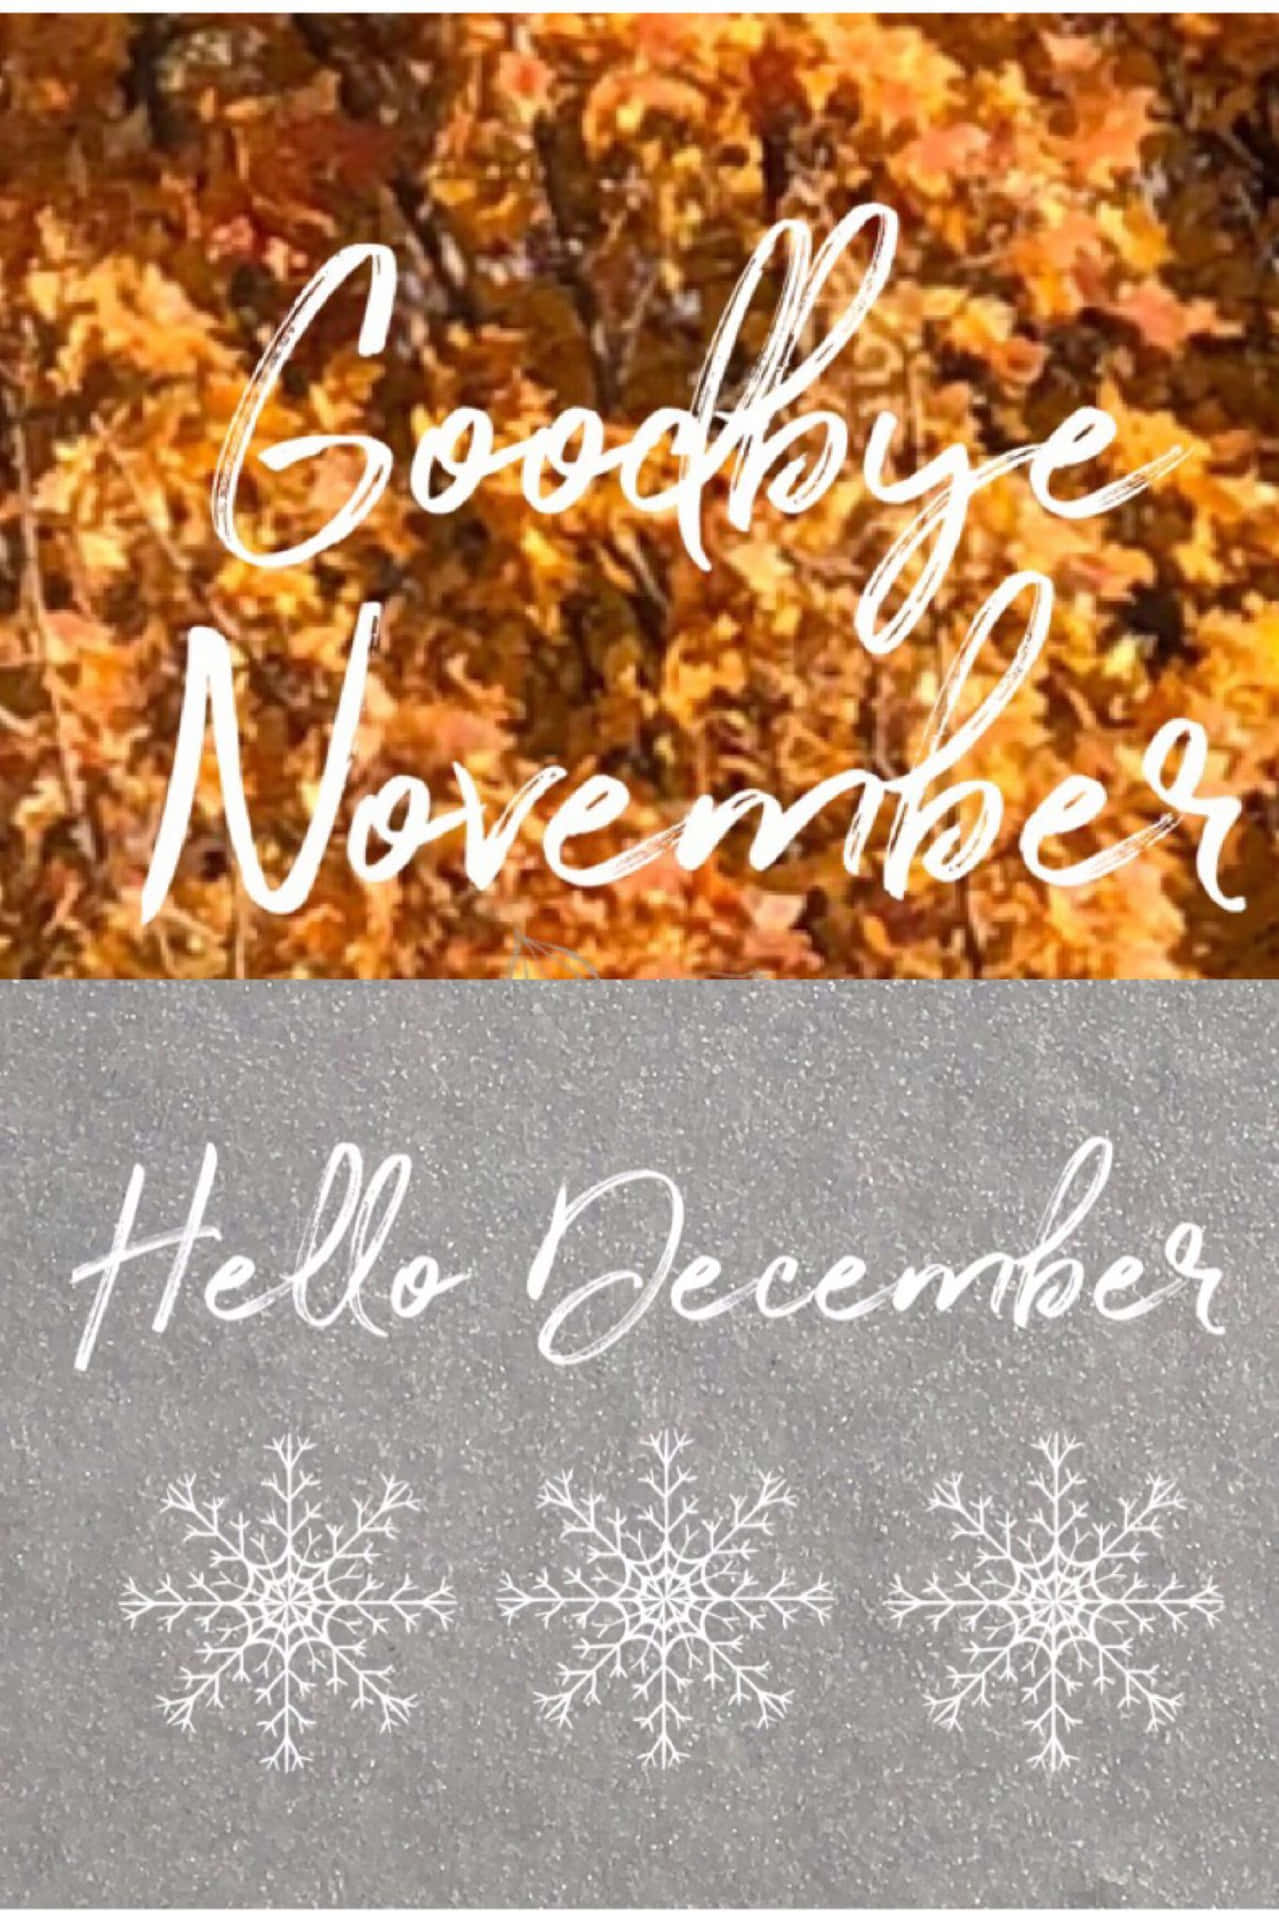 Goodbye November, Hello December! Wallpaper